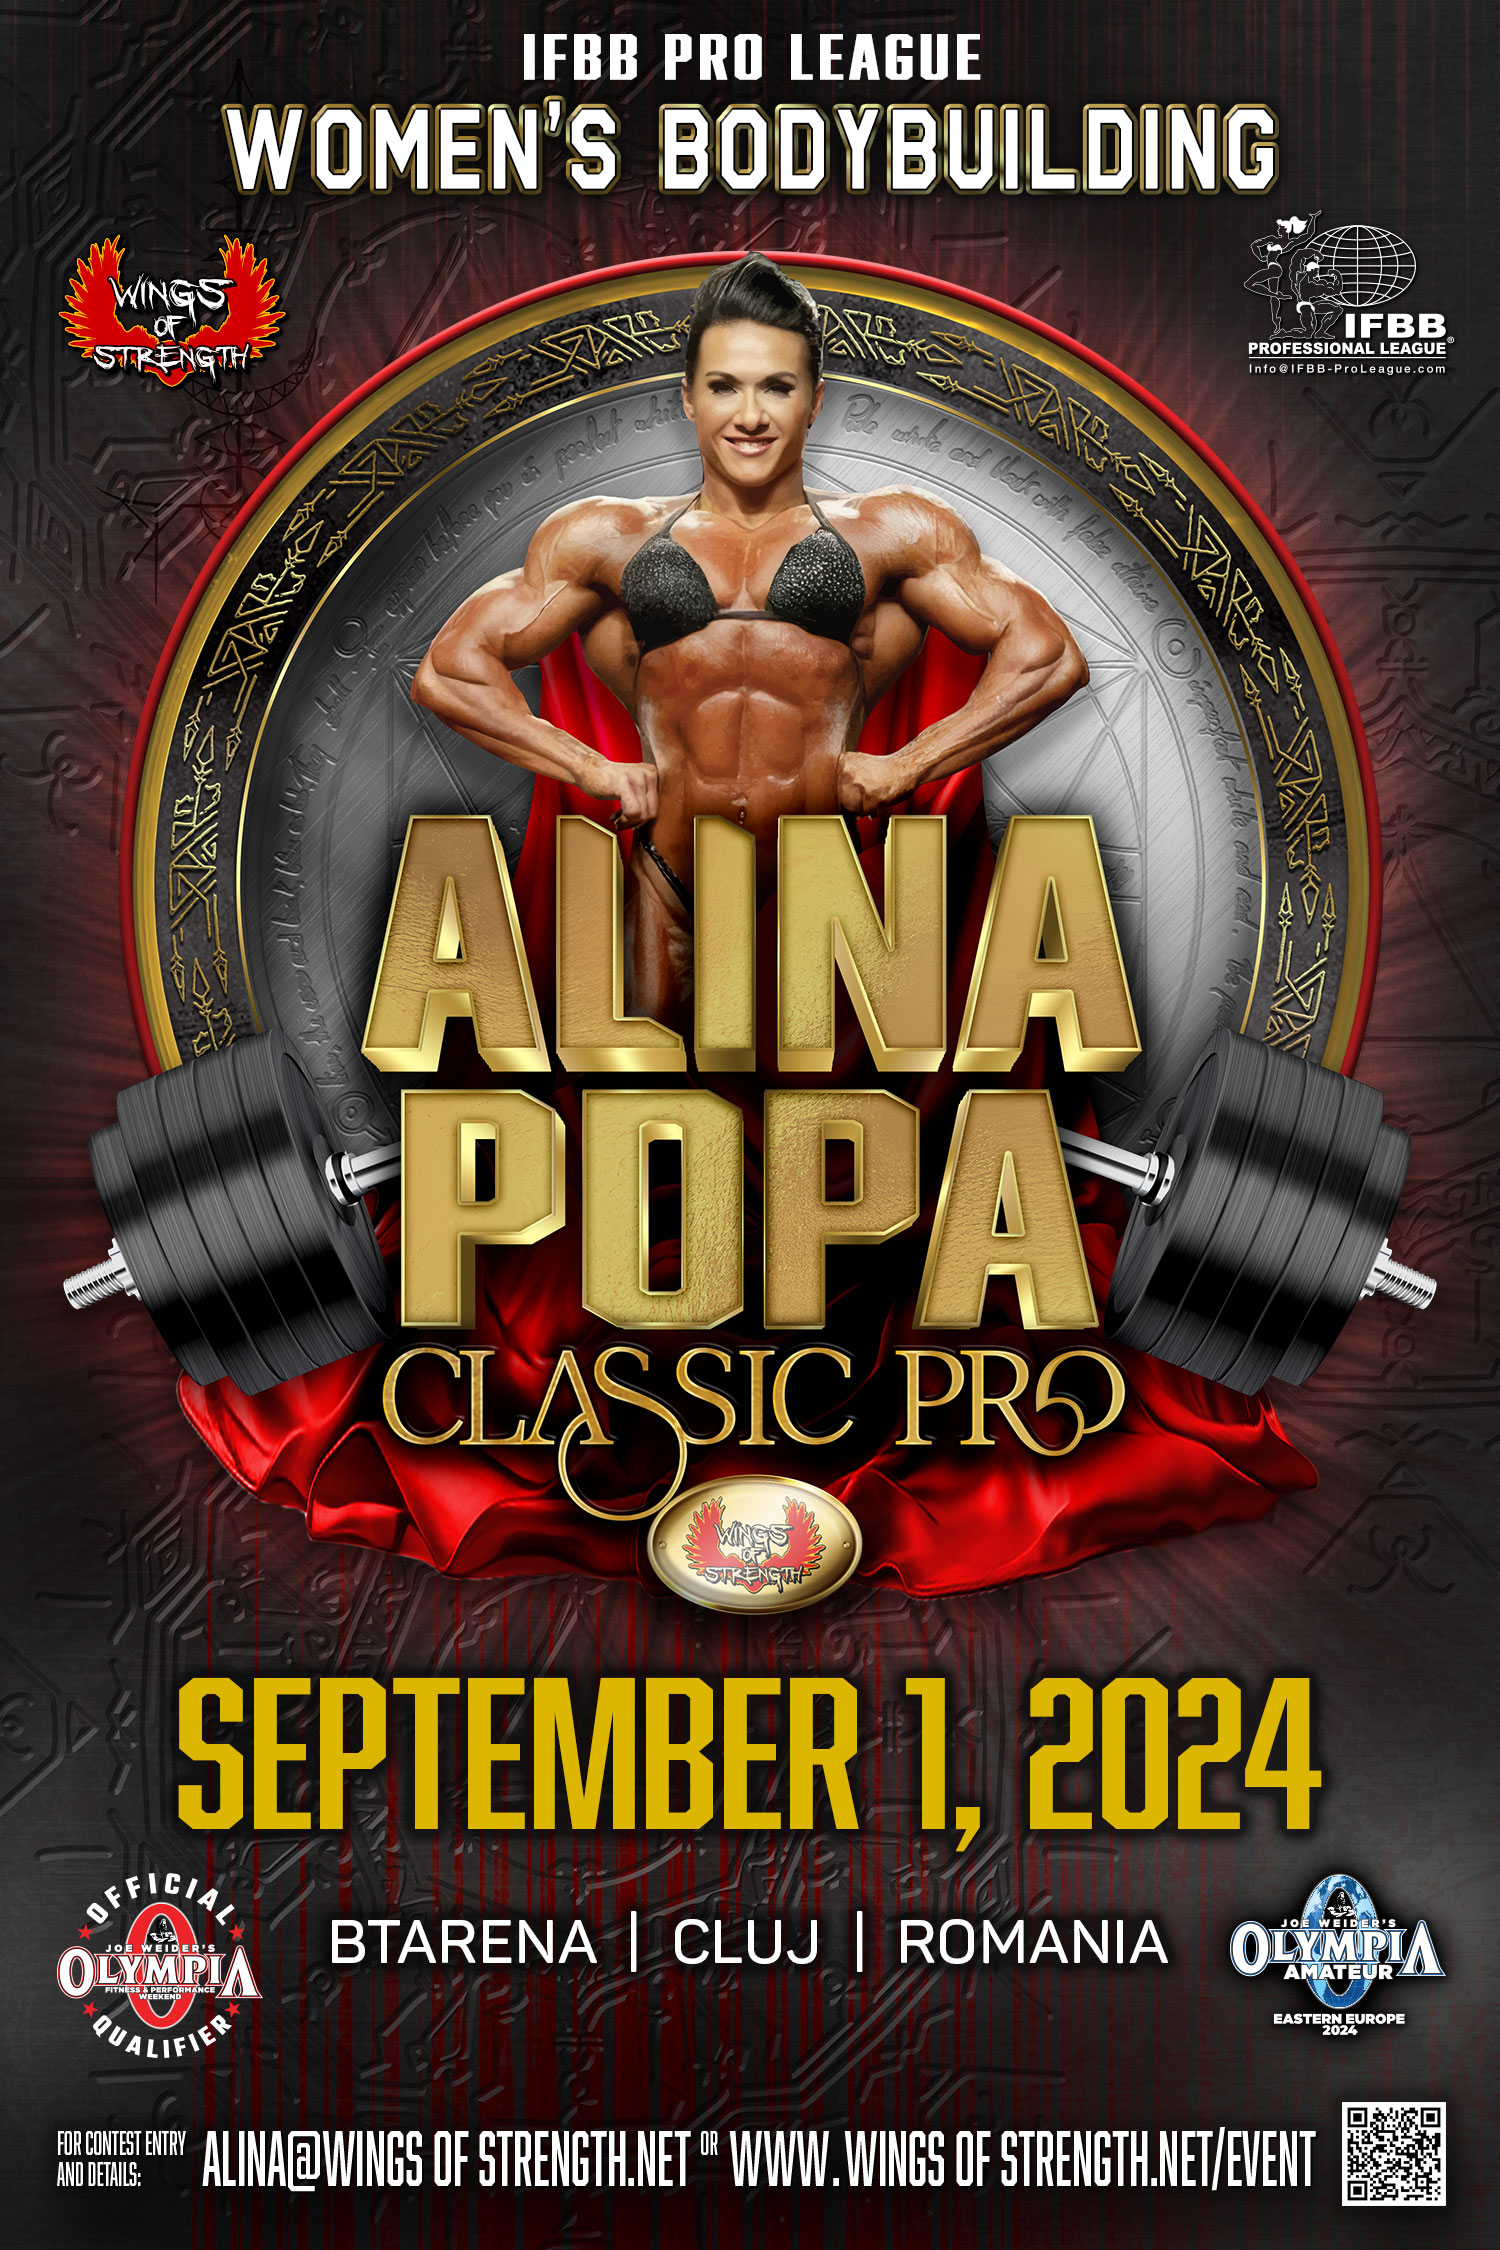 IFBB Pro Alina Popa Classic Pro show